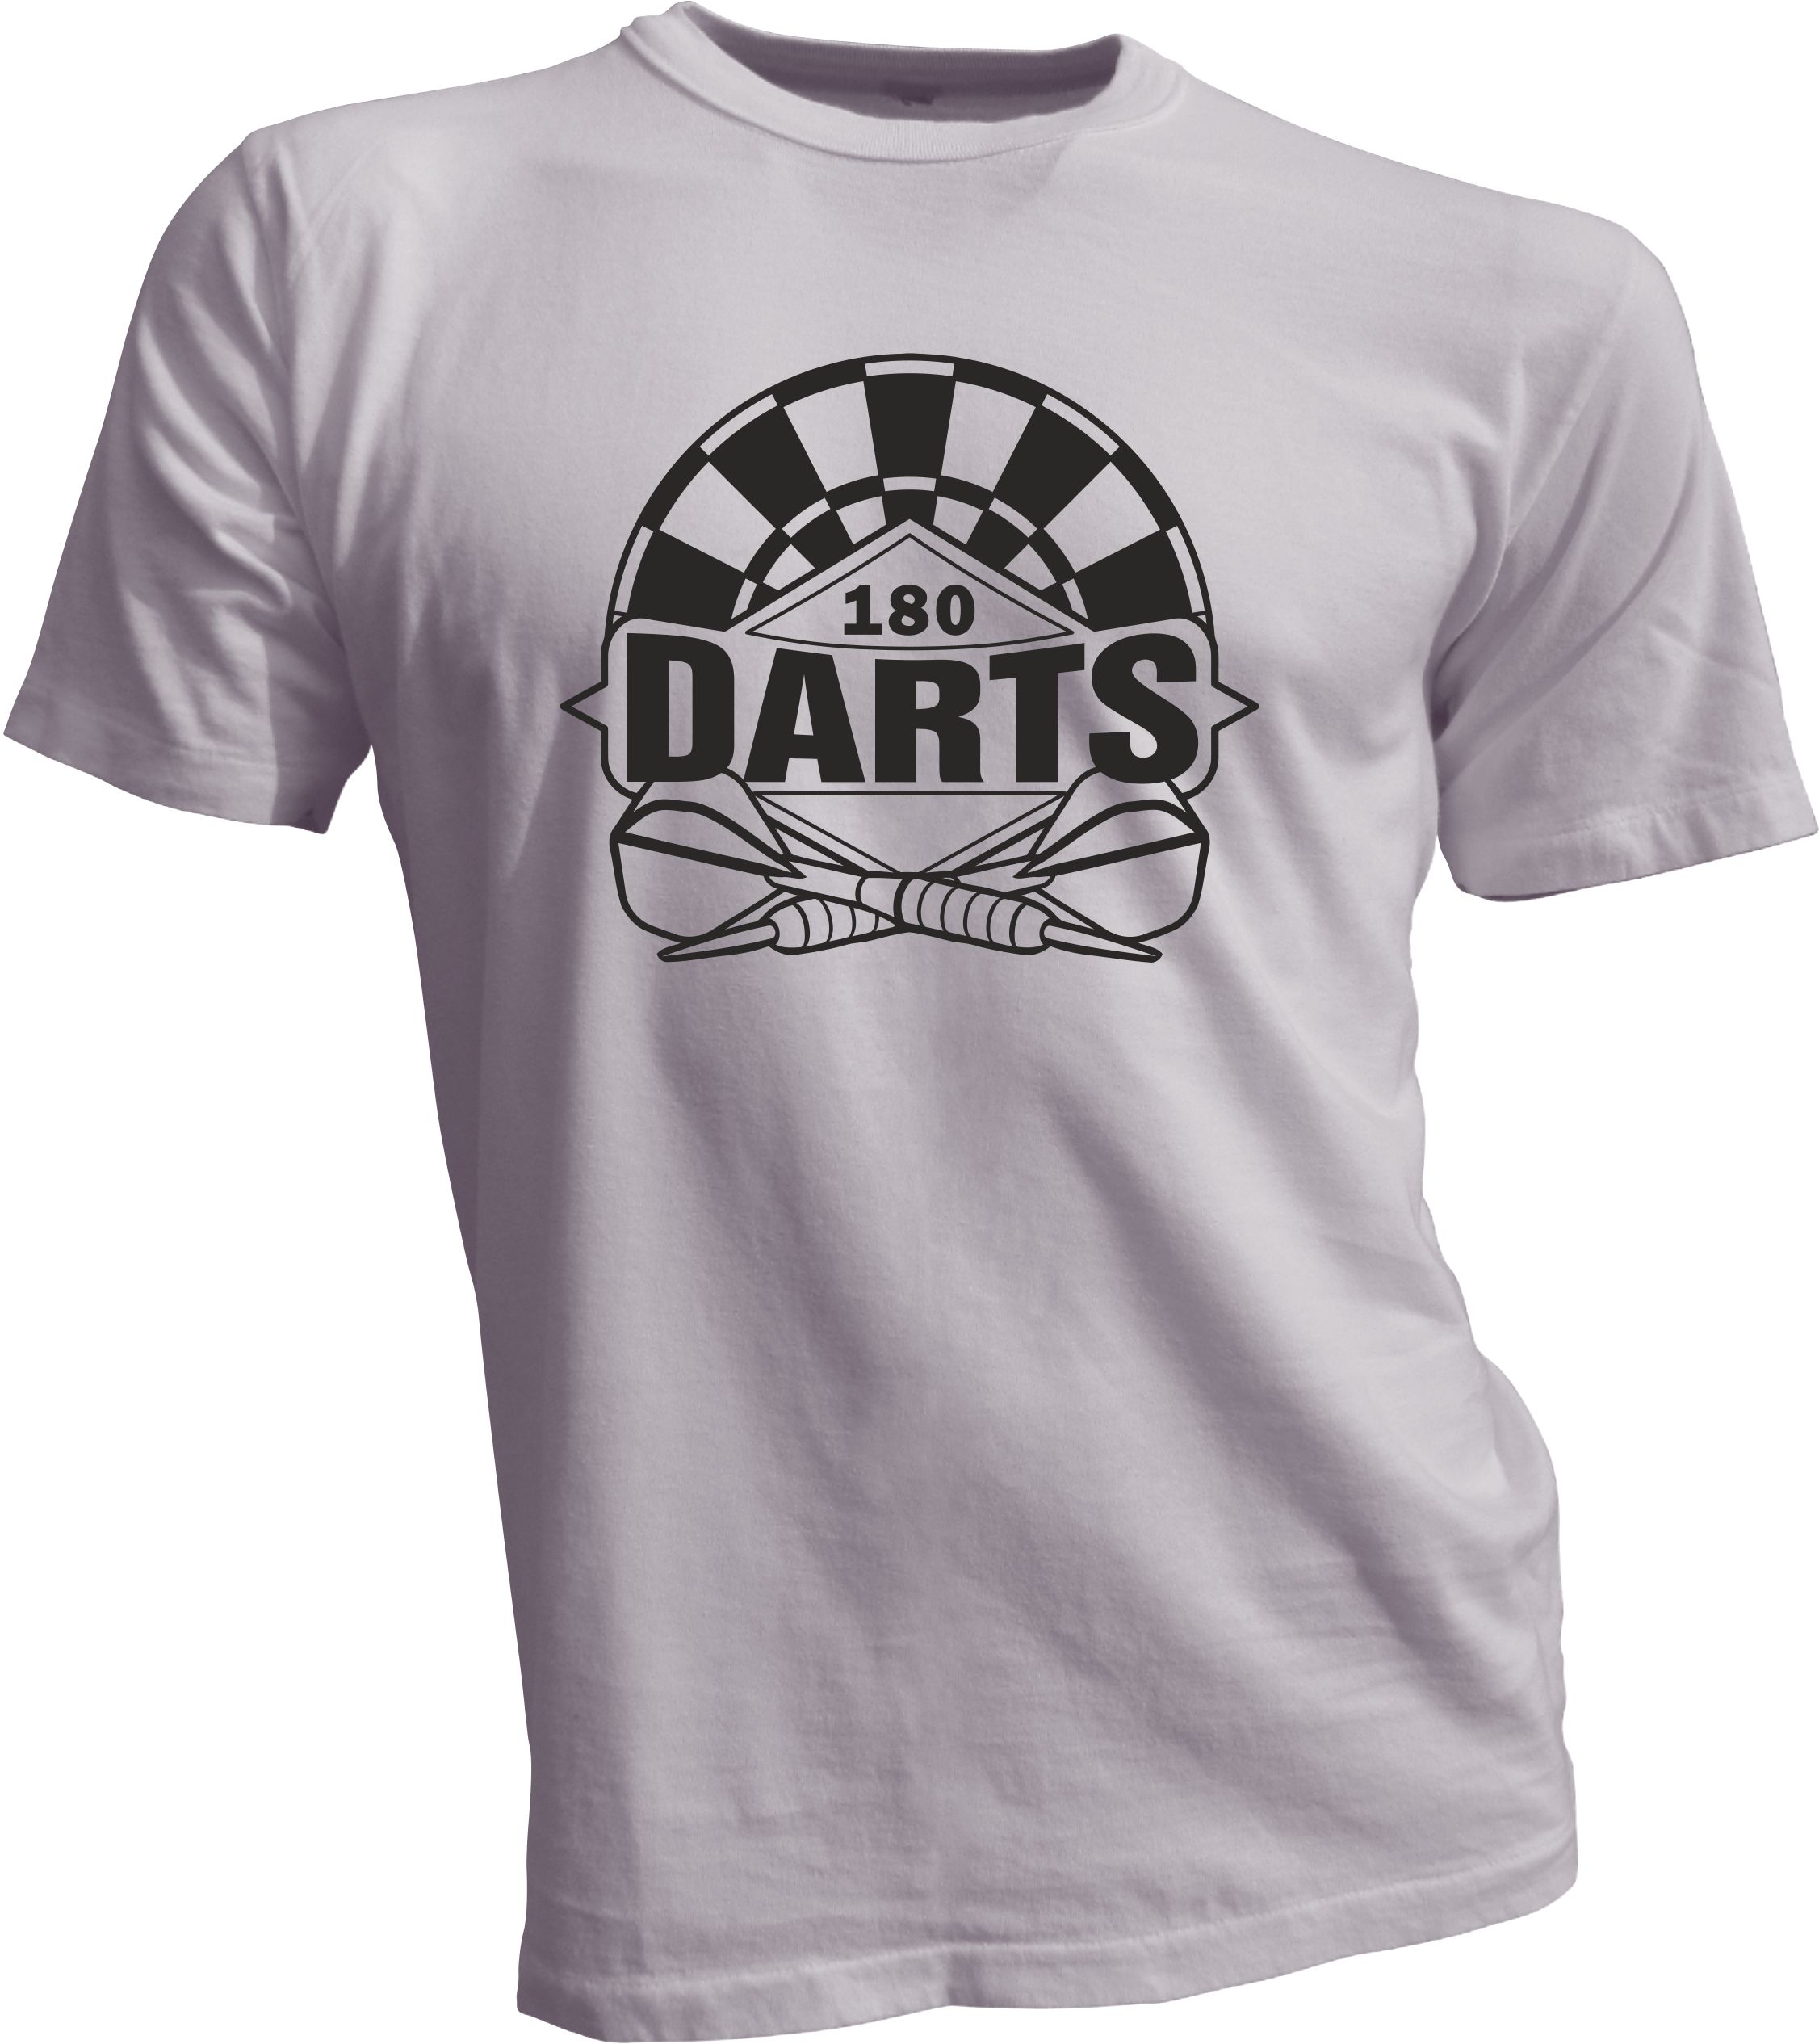 darts t shirt shop